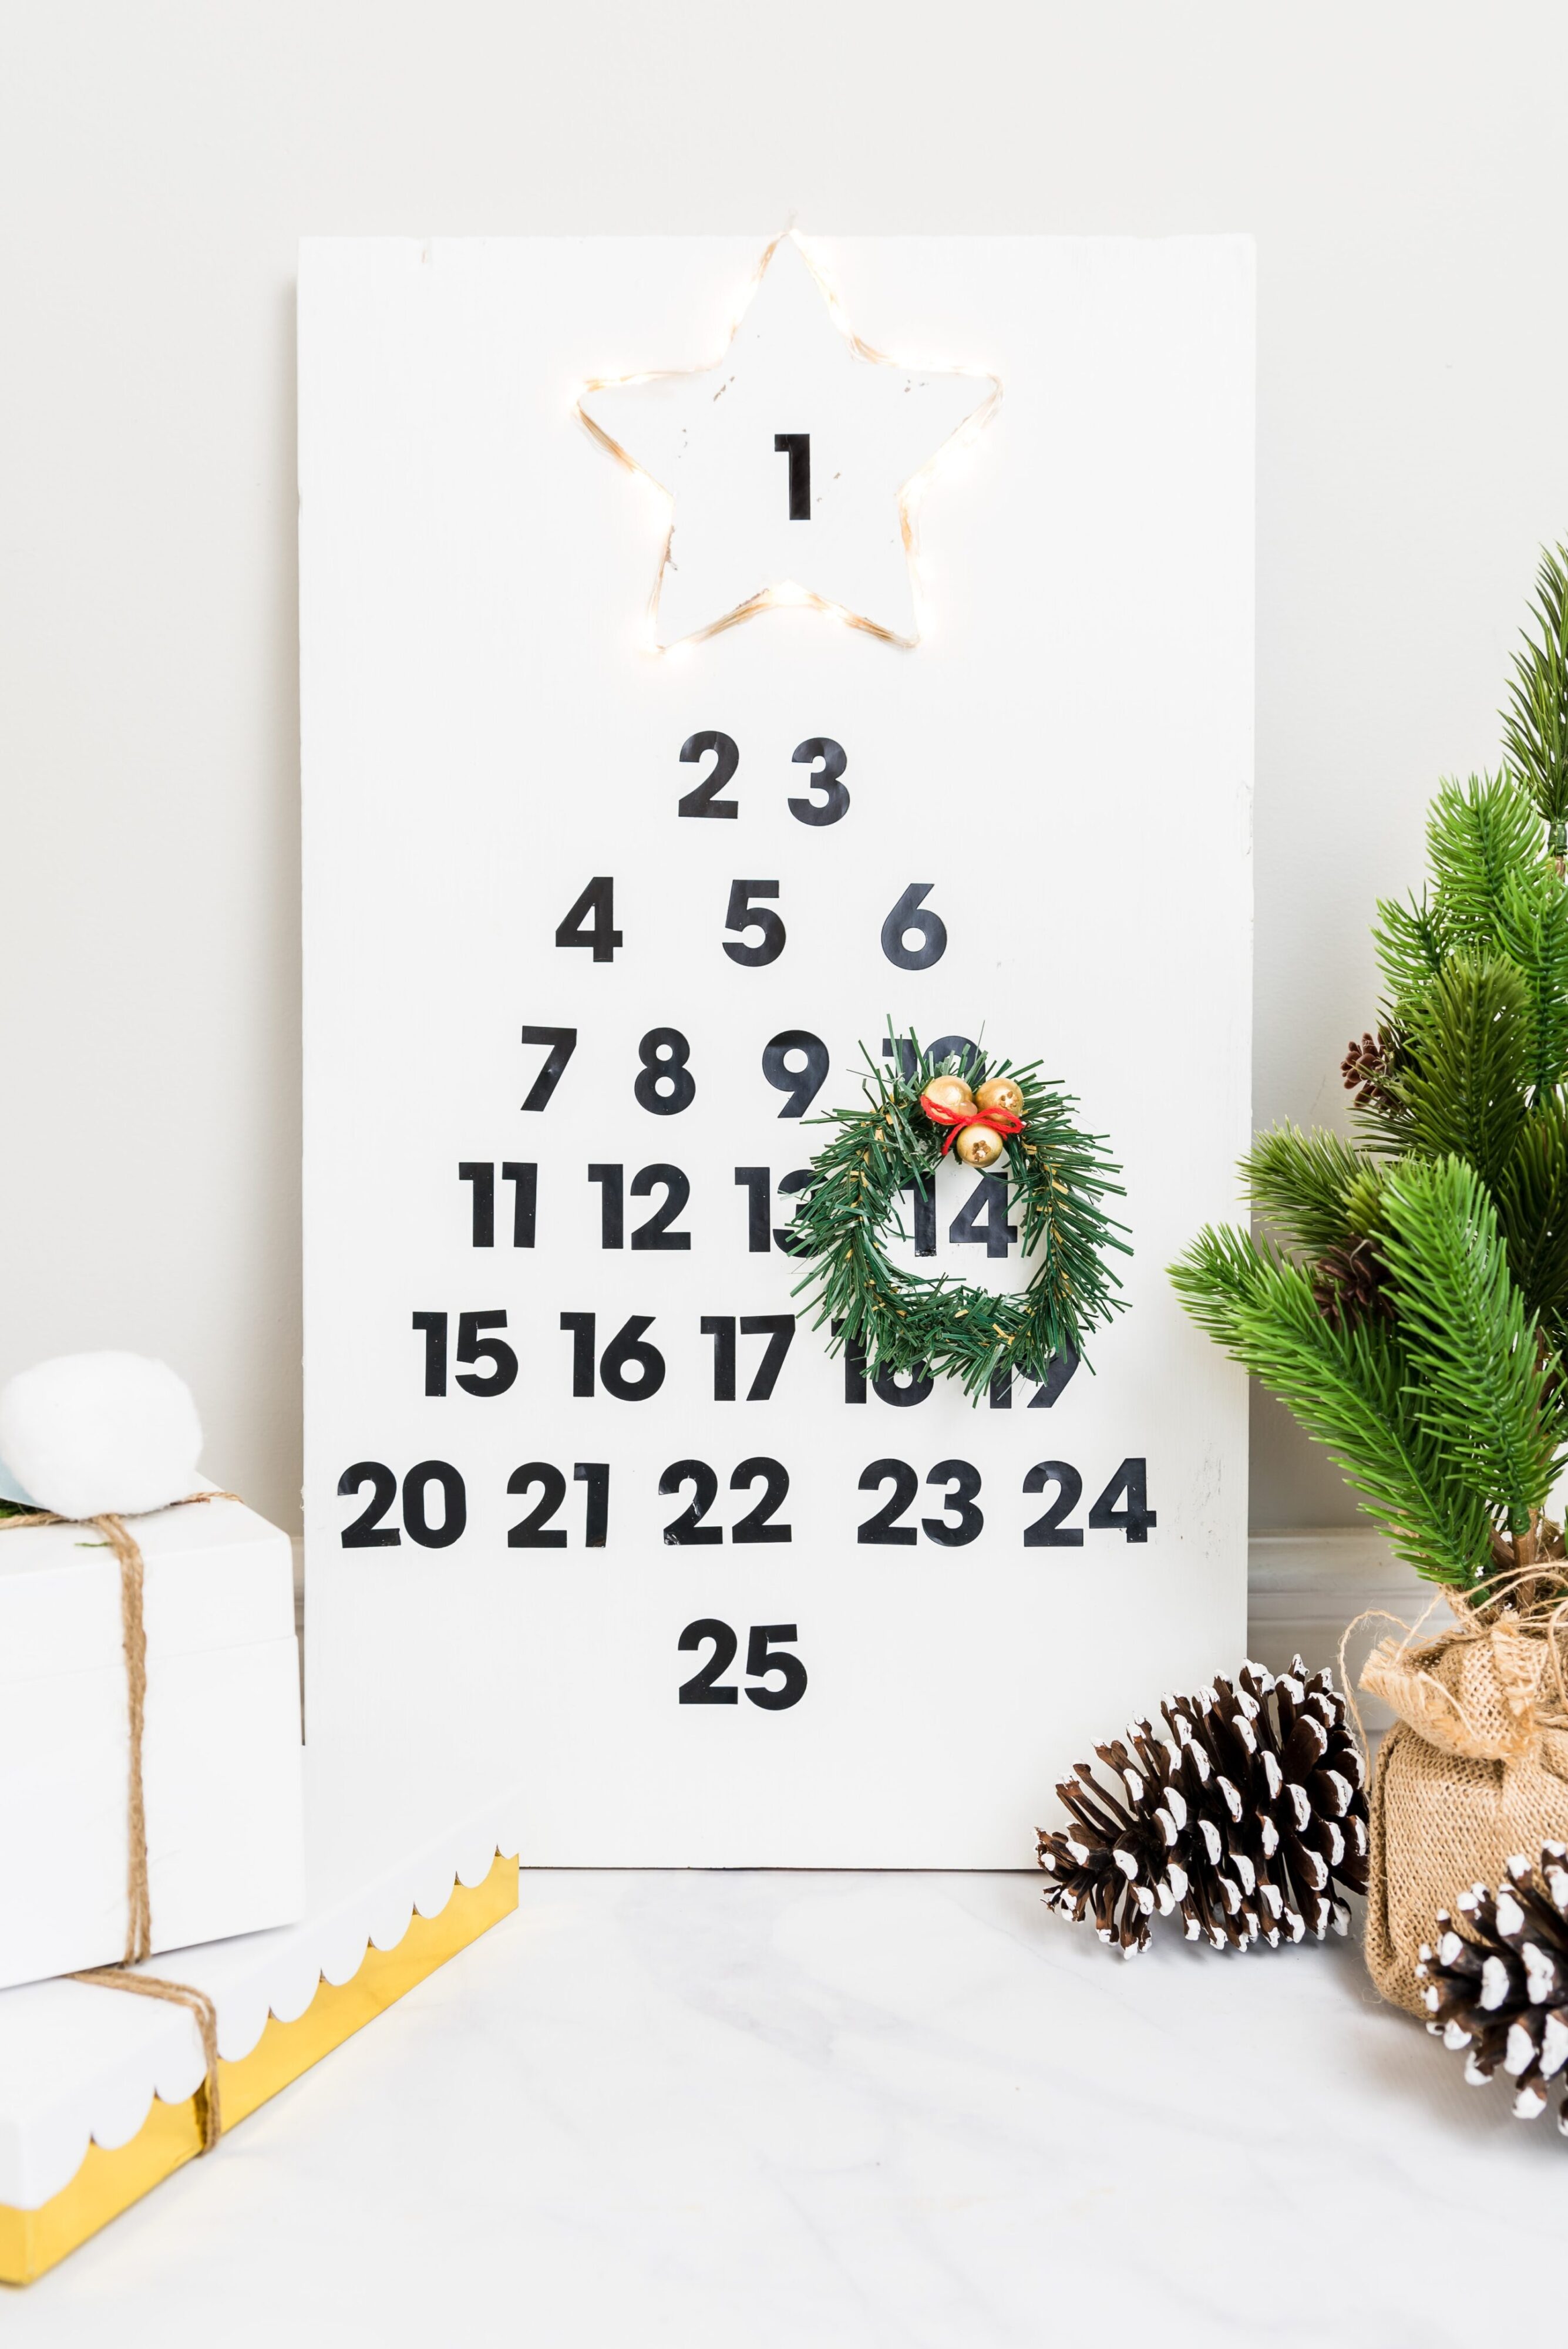 DIY wooden advent calendar featuring sticker black numbers, a homemade garland wreath, and a lit up star.